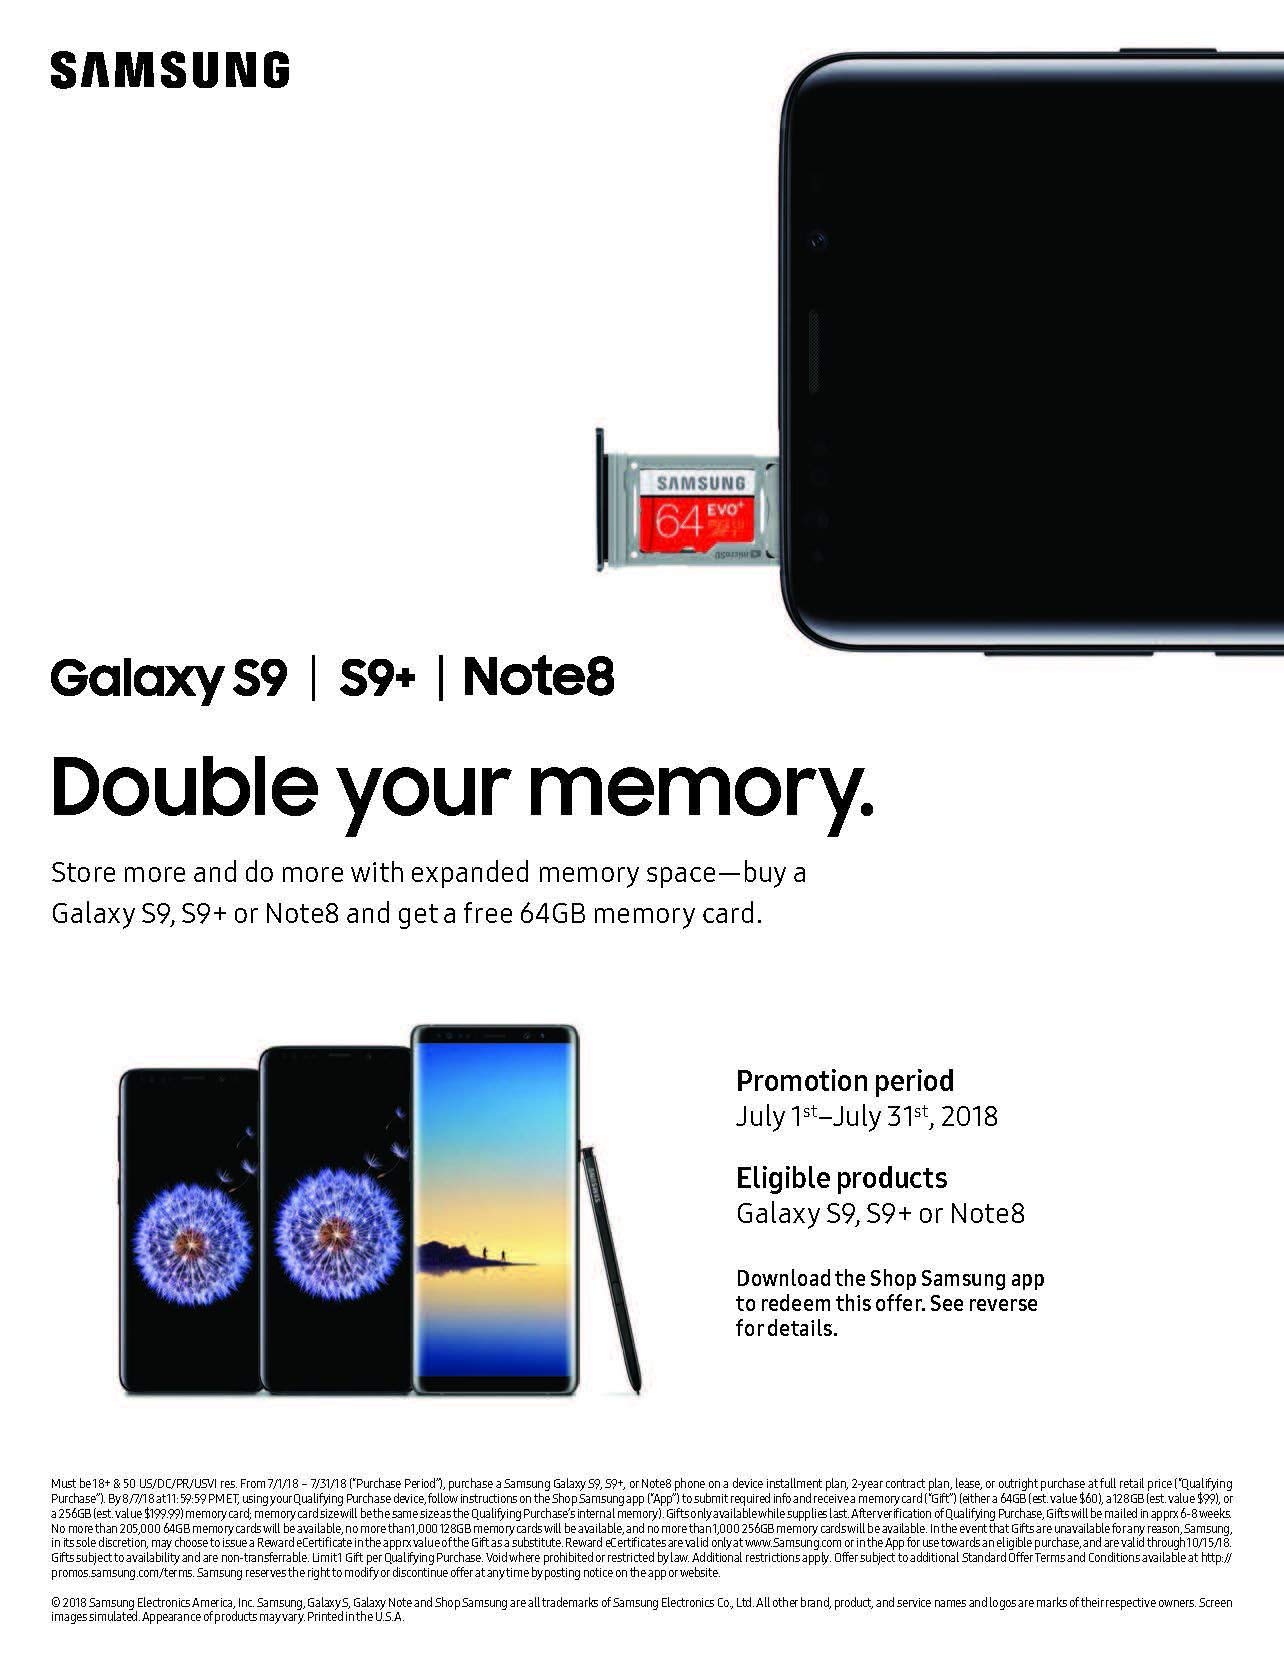 Samsung Galaxy S9, 64GB, Midnight Black - Fully Unlocked (Renewed)